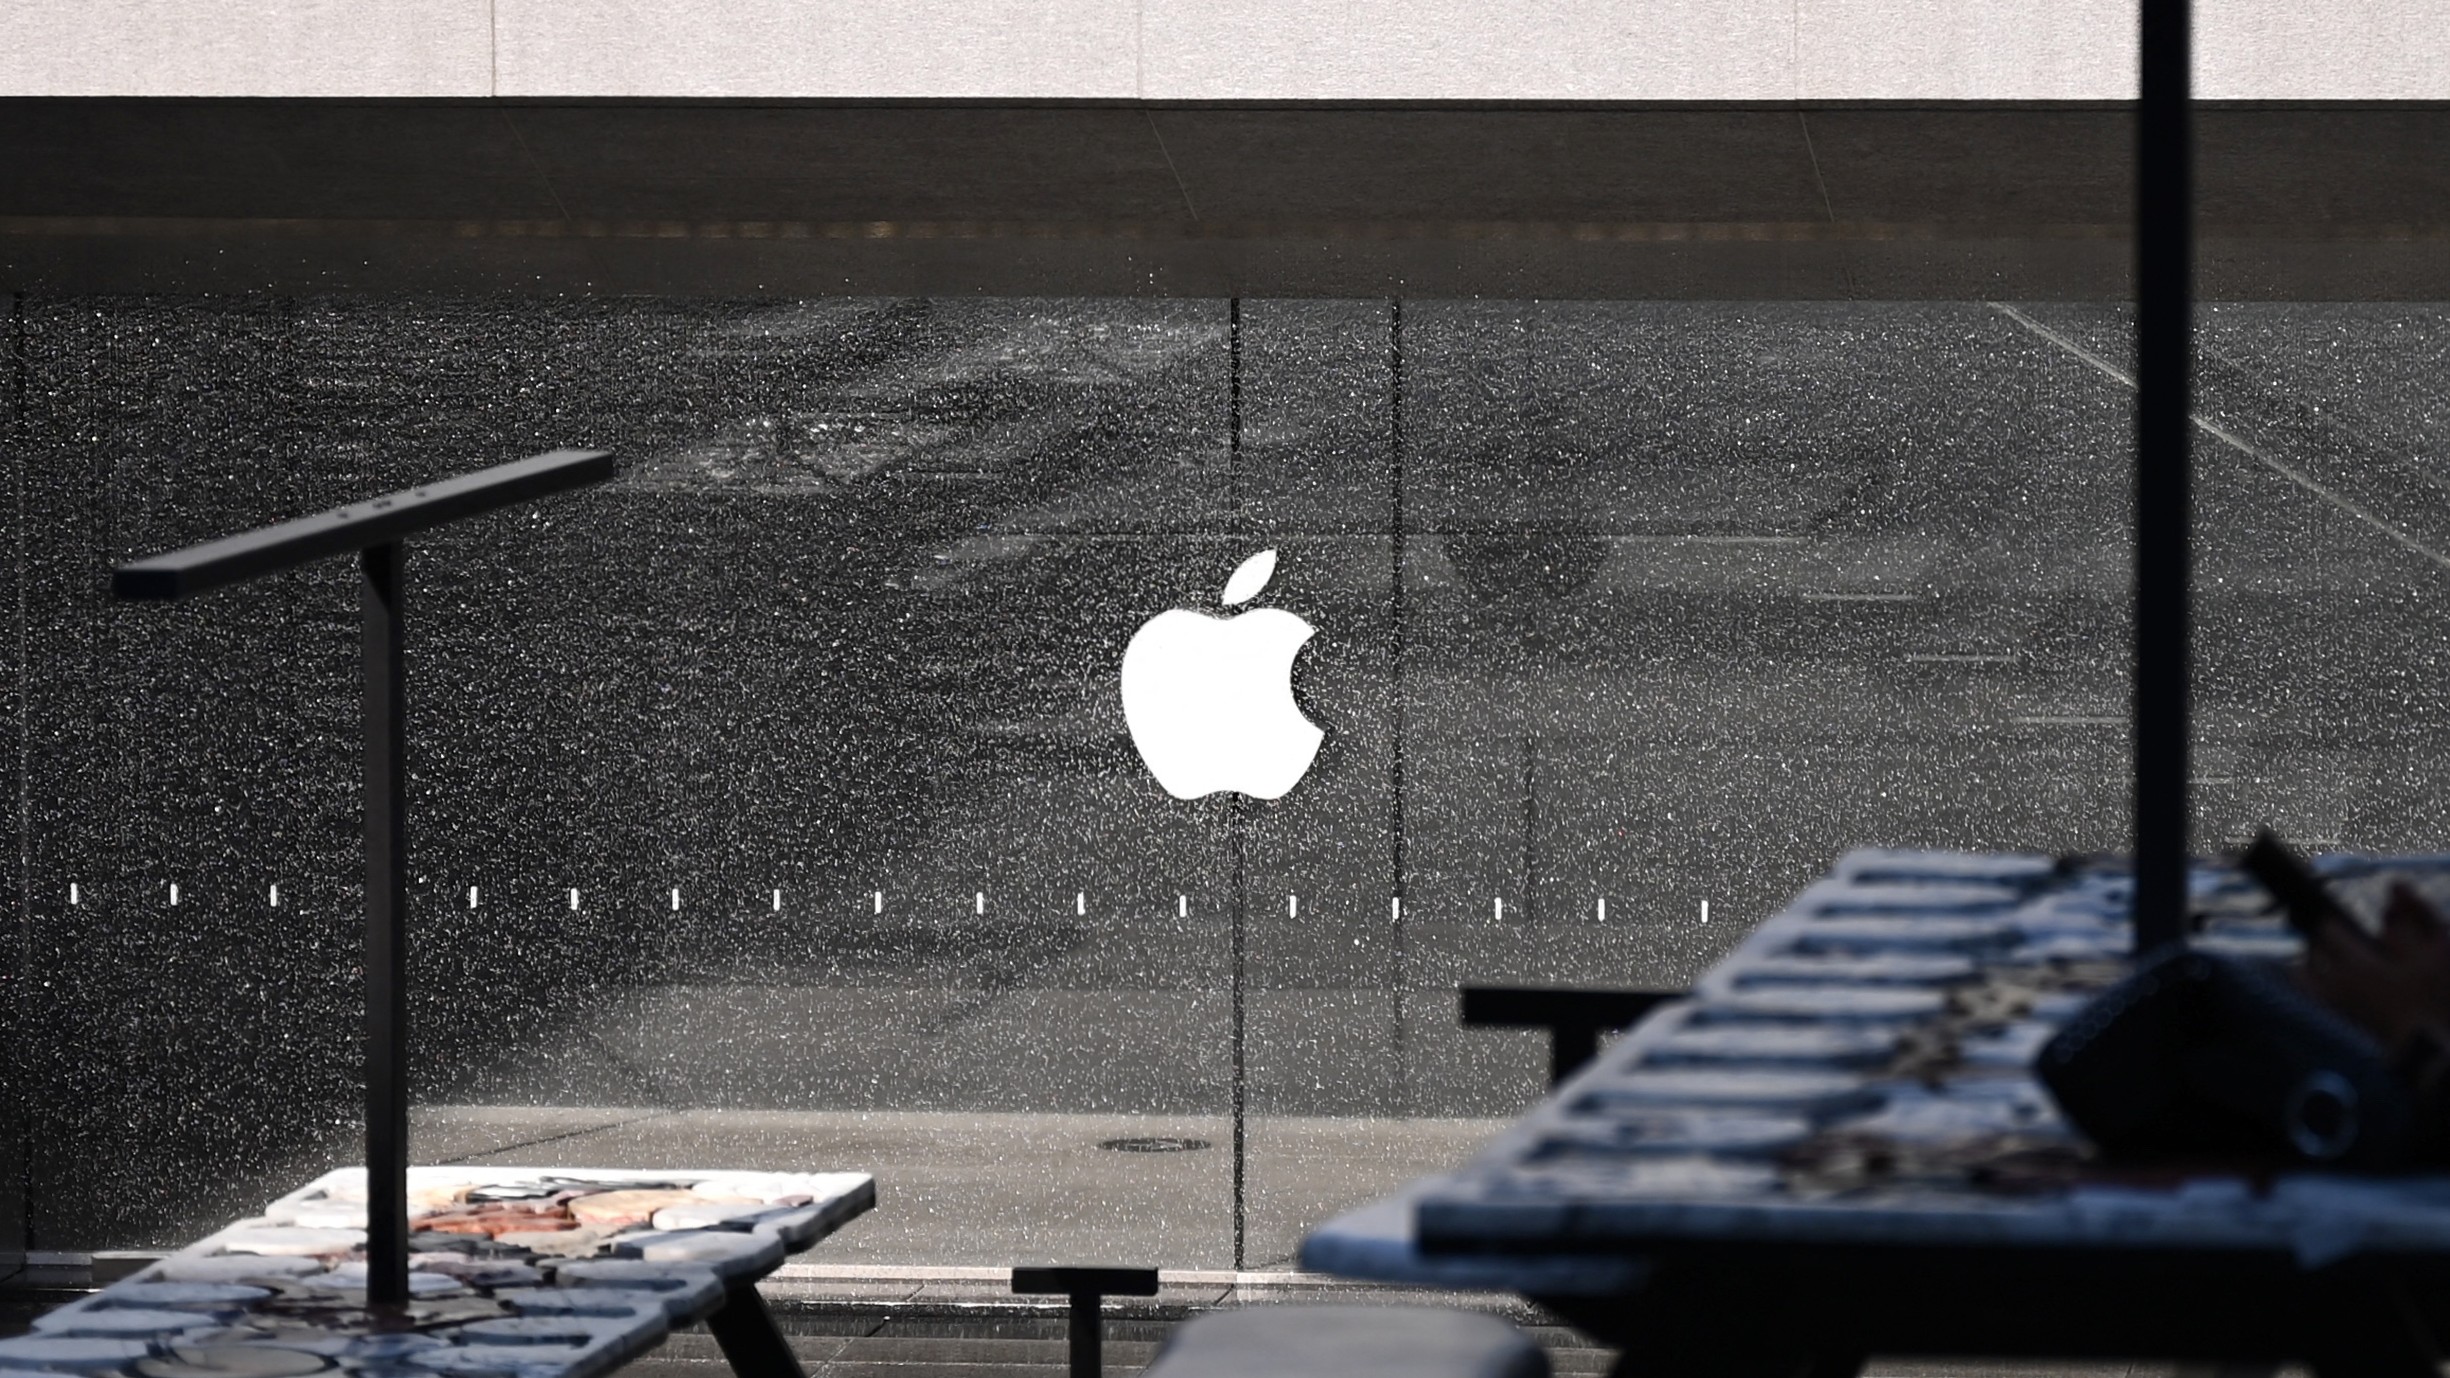 Apple شركة  13 يناير 2022 0 تعقيب
Apple يفقد ثاني موظف شريحة مهم أمام منافس